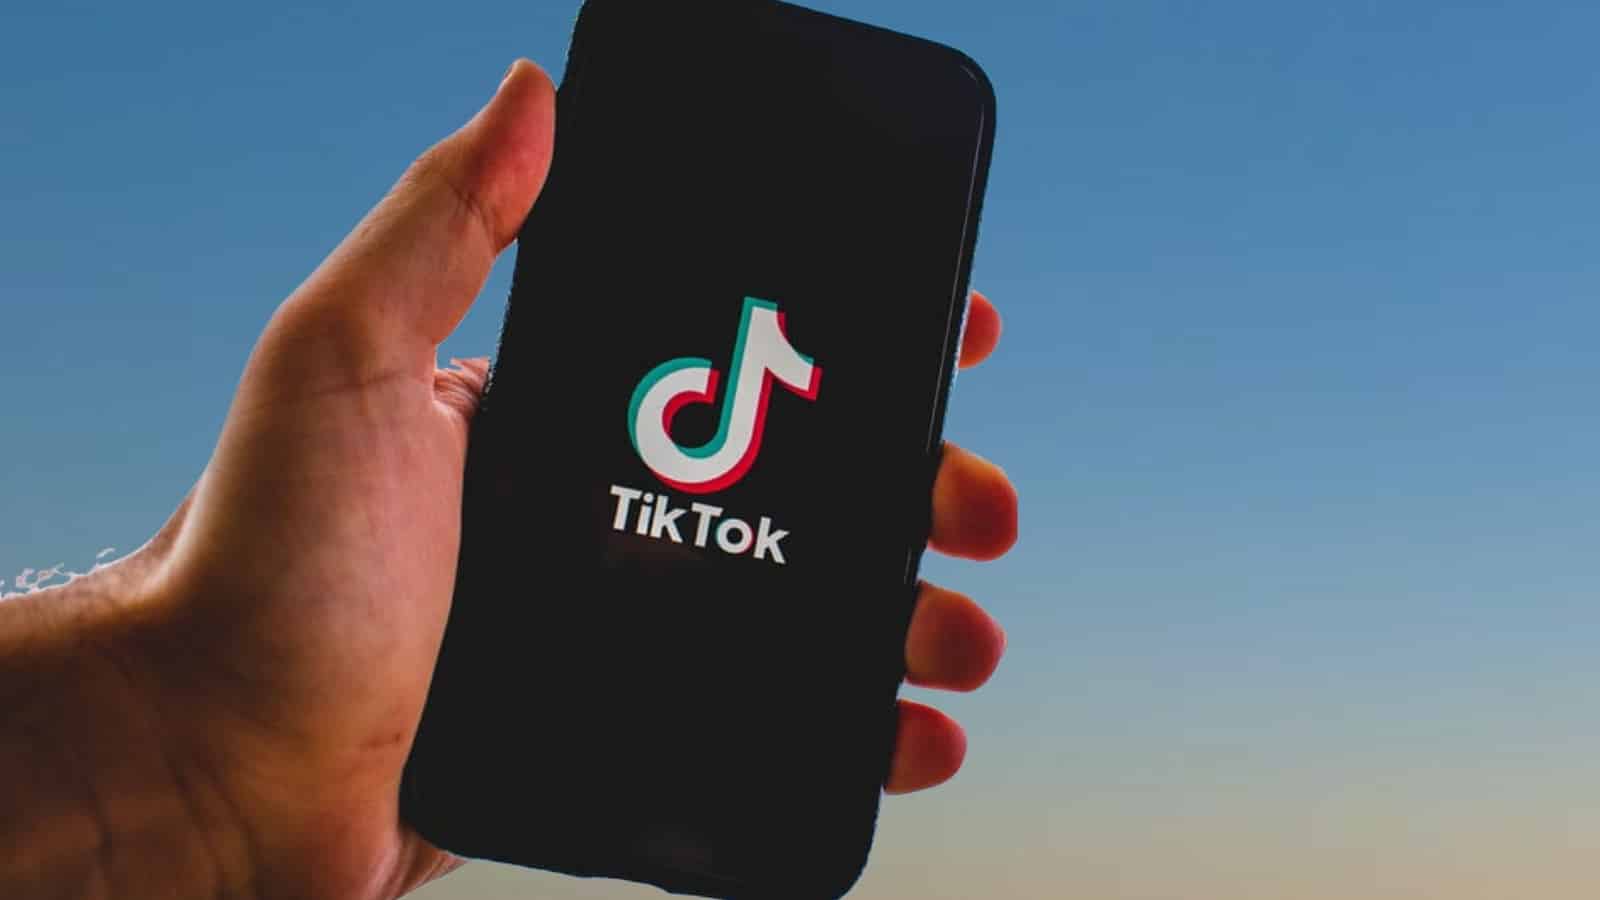 How Many Followers Do You Need on TikTok To Get Paid? - Viralyft